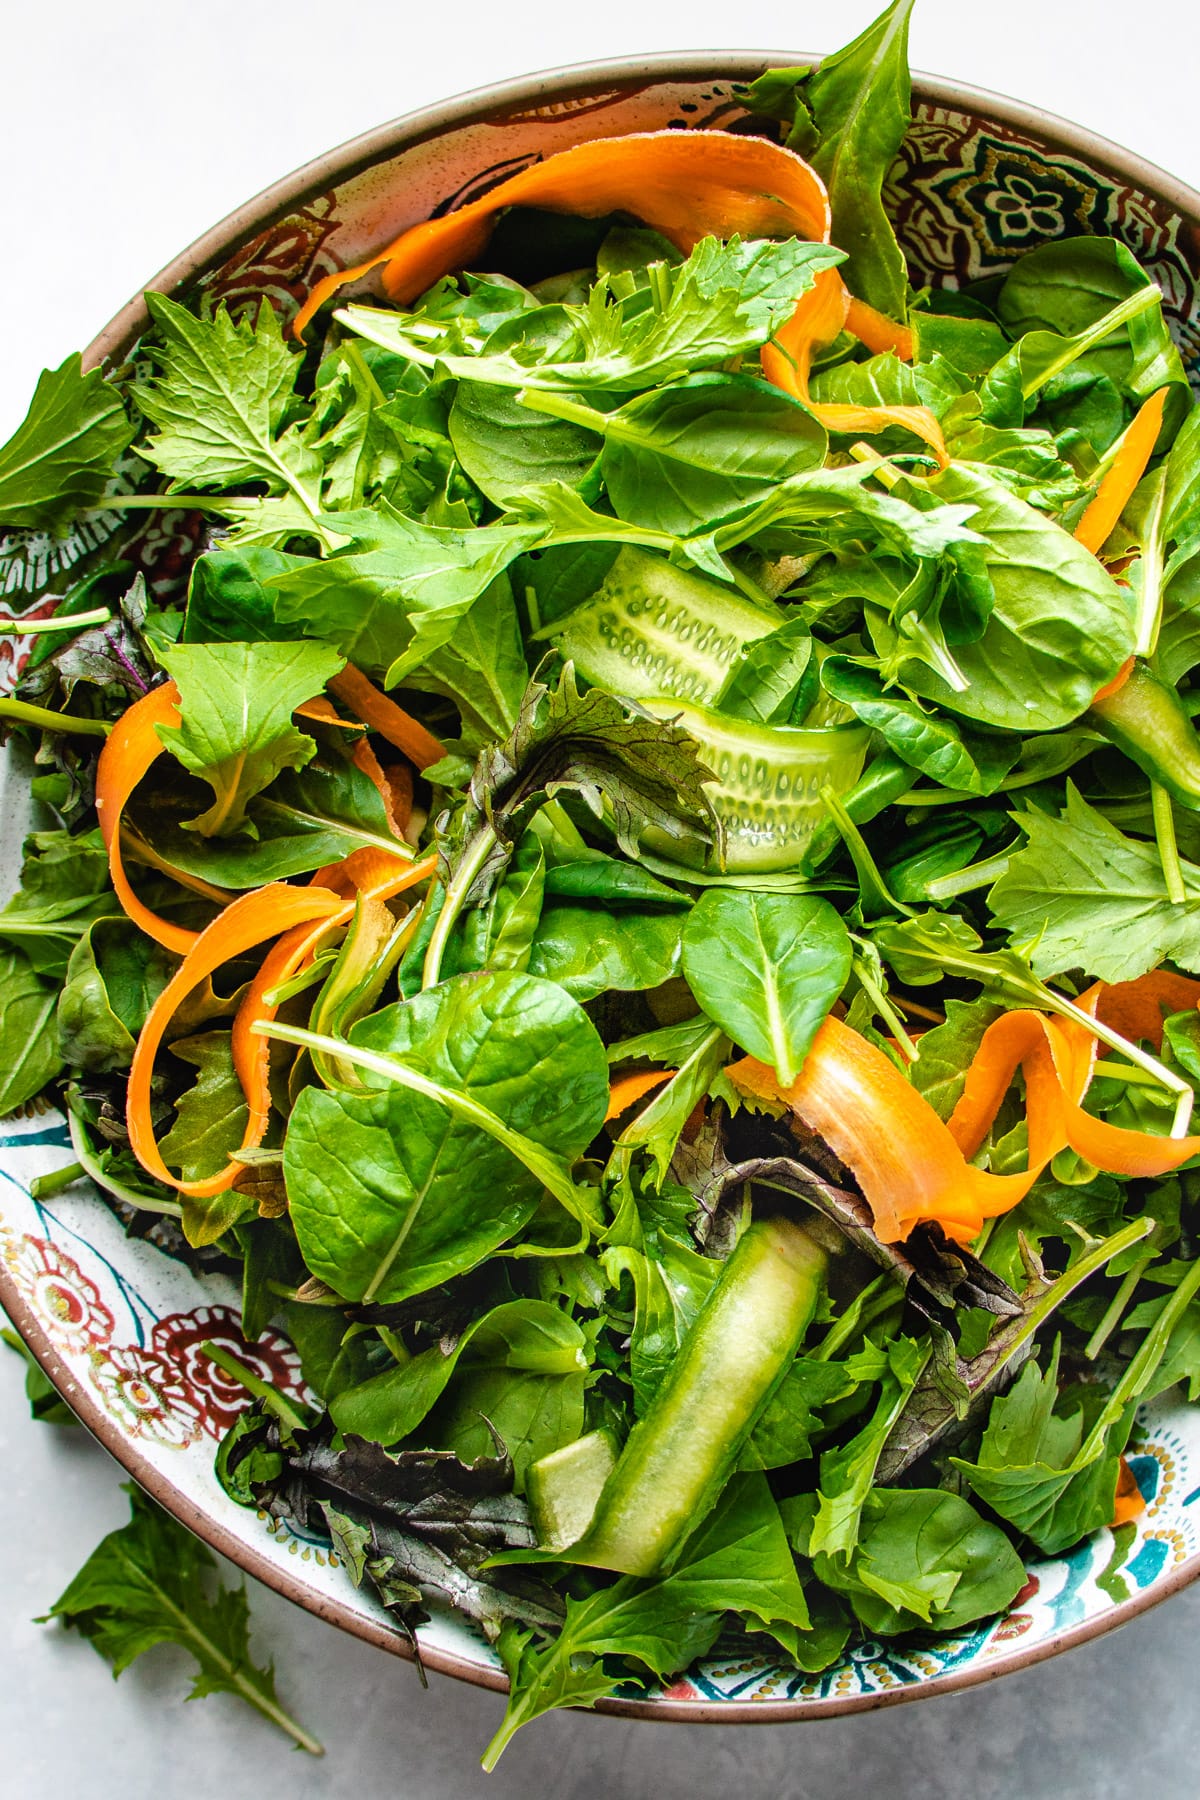 Photo shows a big bowl of fresh salad greens